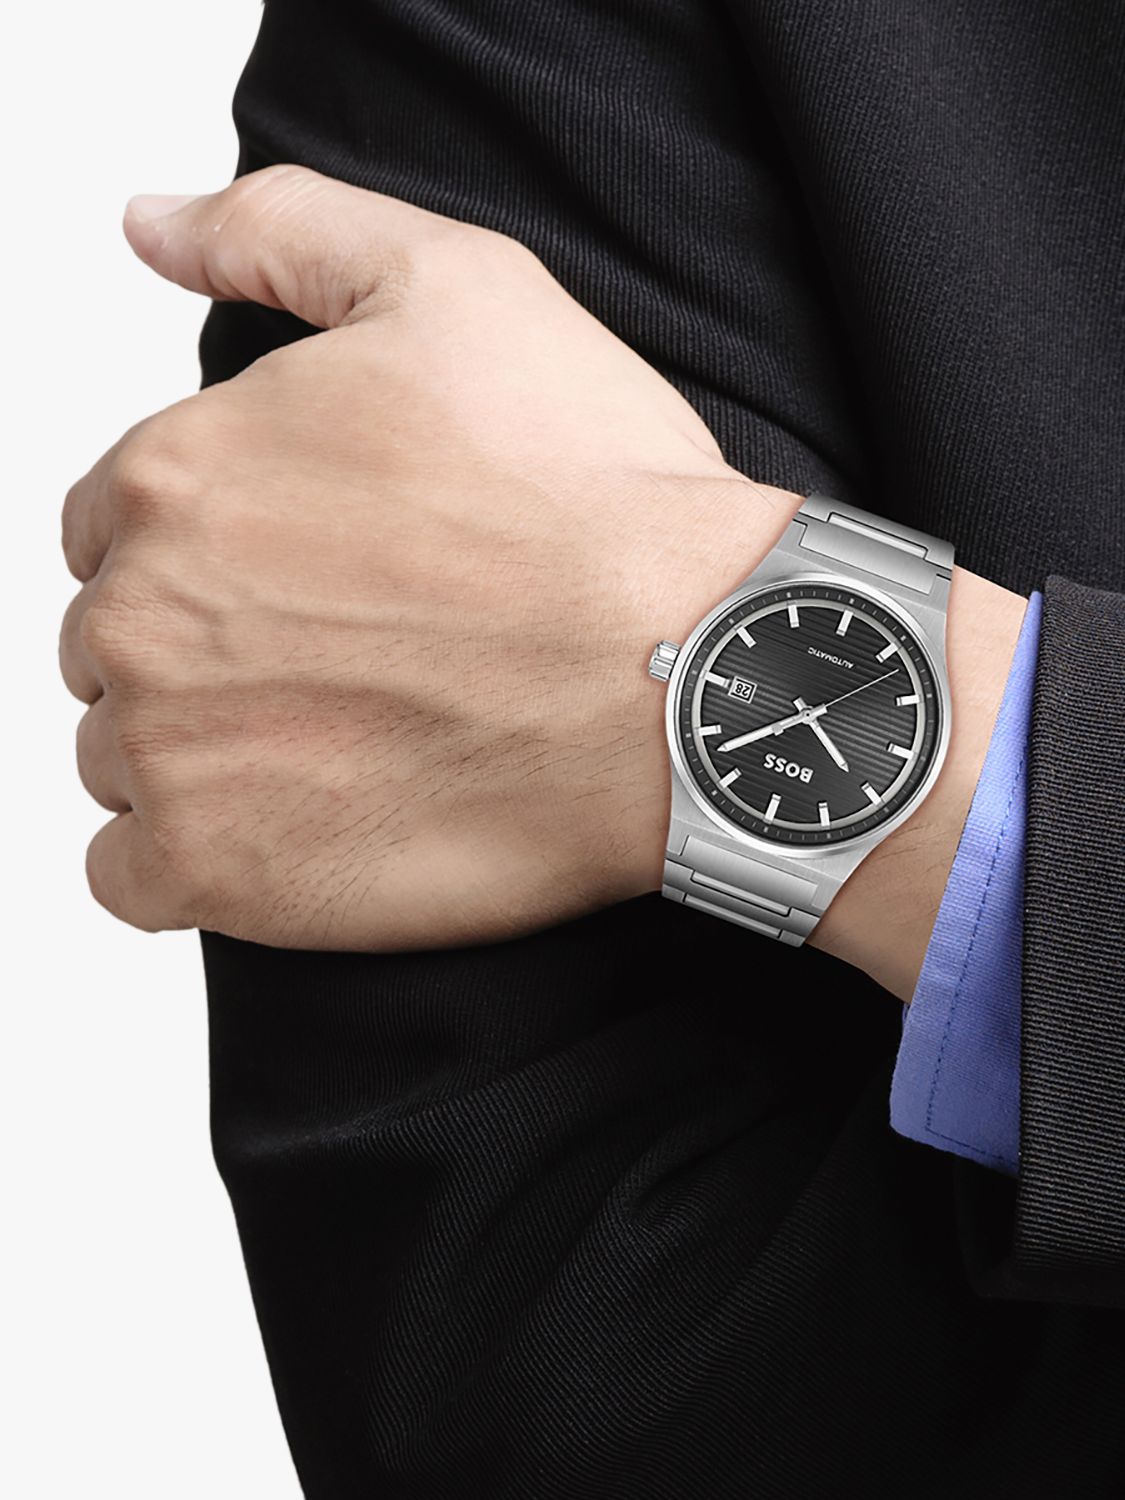 BOSS Men's Candor Automatic Textured Dial Bracelet Strap Watch, Silver/Black 1514117